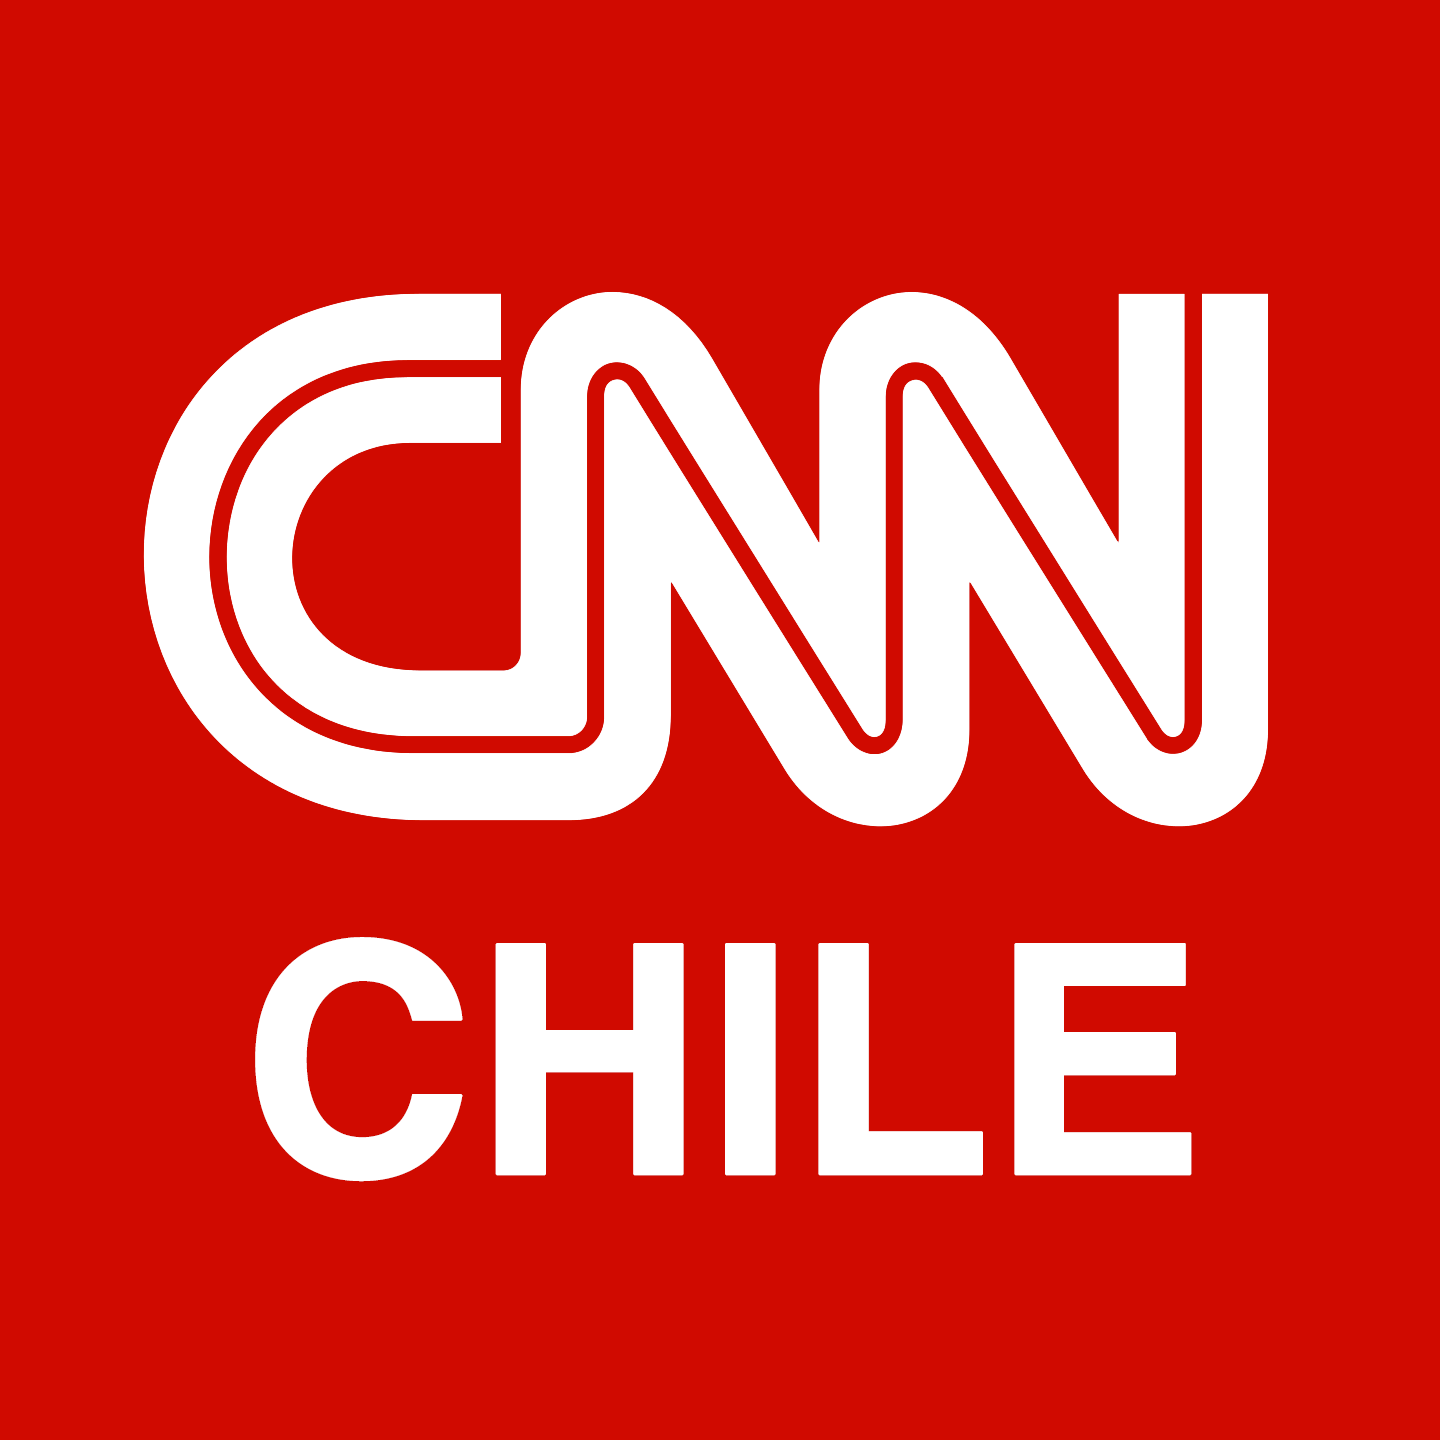 CNNChile logo